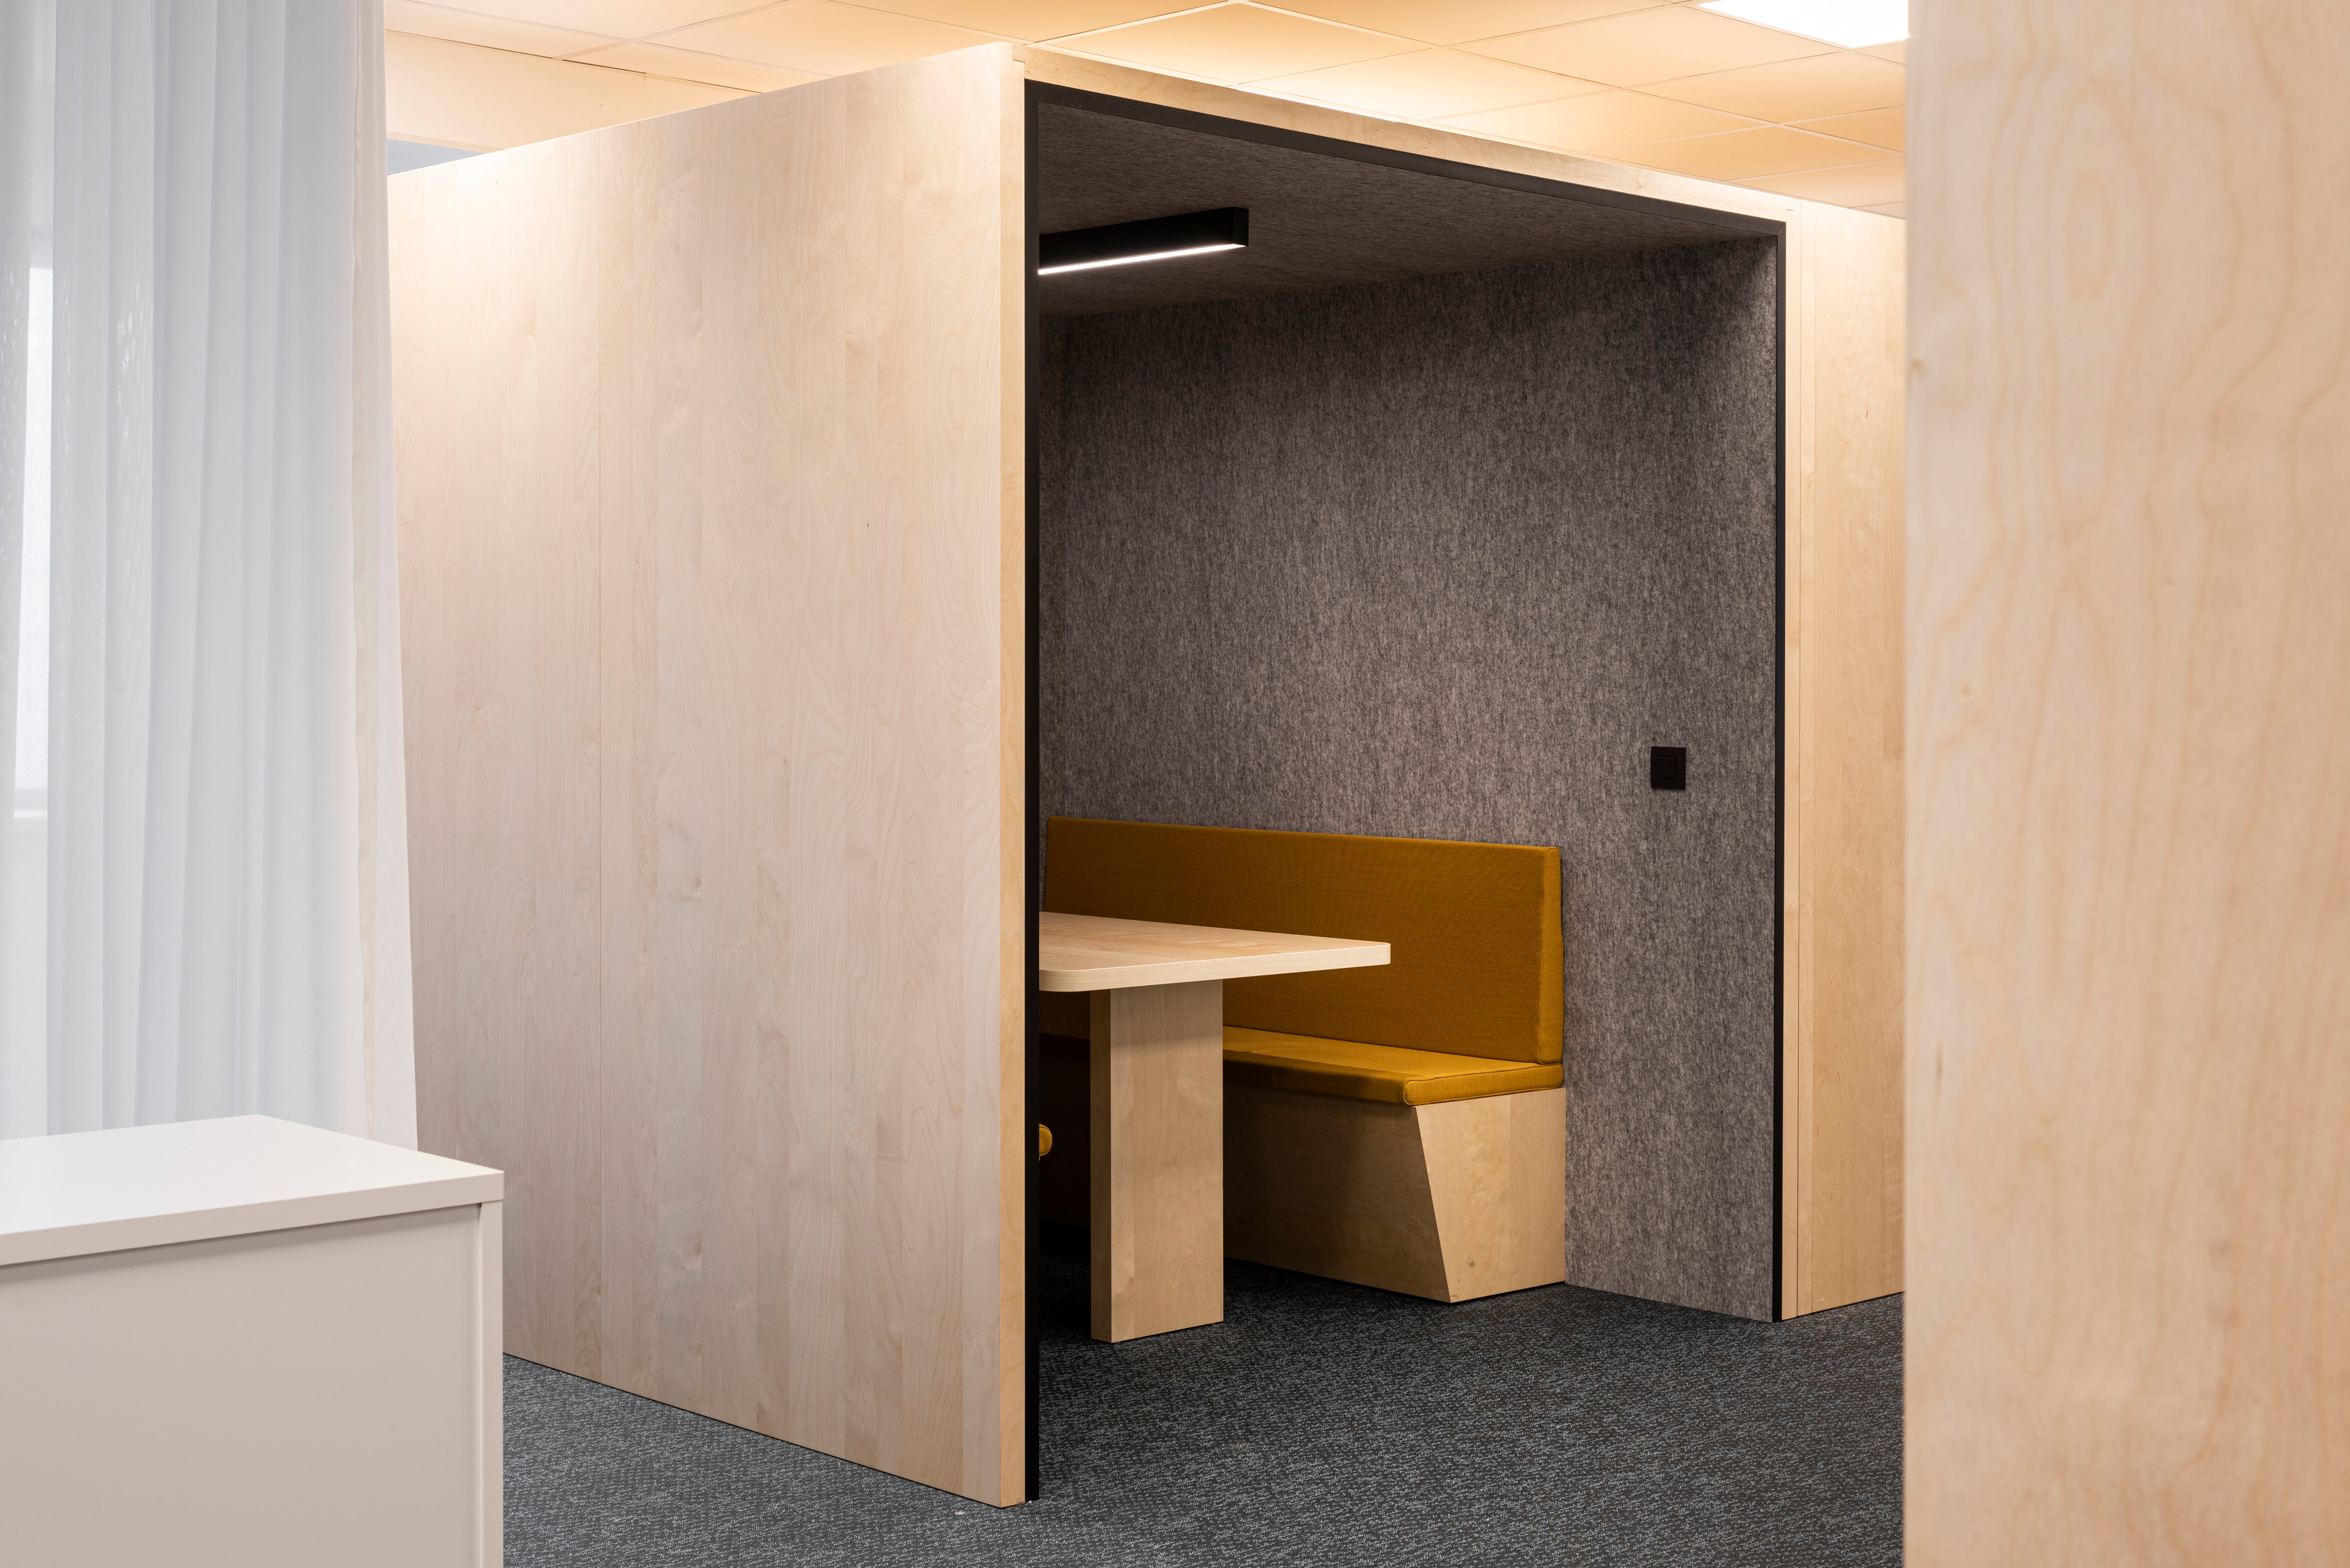 Nordus snow birch - snow birch - small office space - pod - office - wood panels - nordus - snow birch panels - birch wall - birch - veneer 